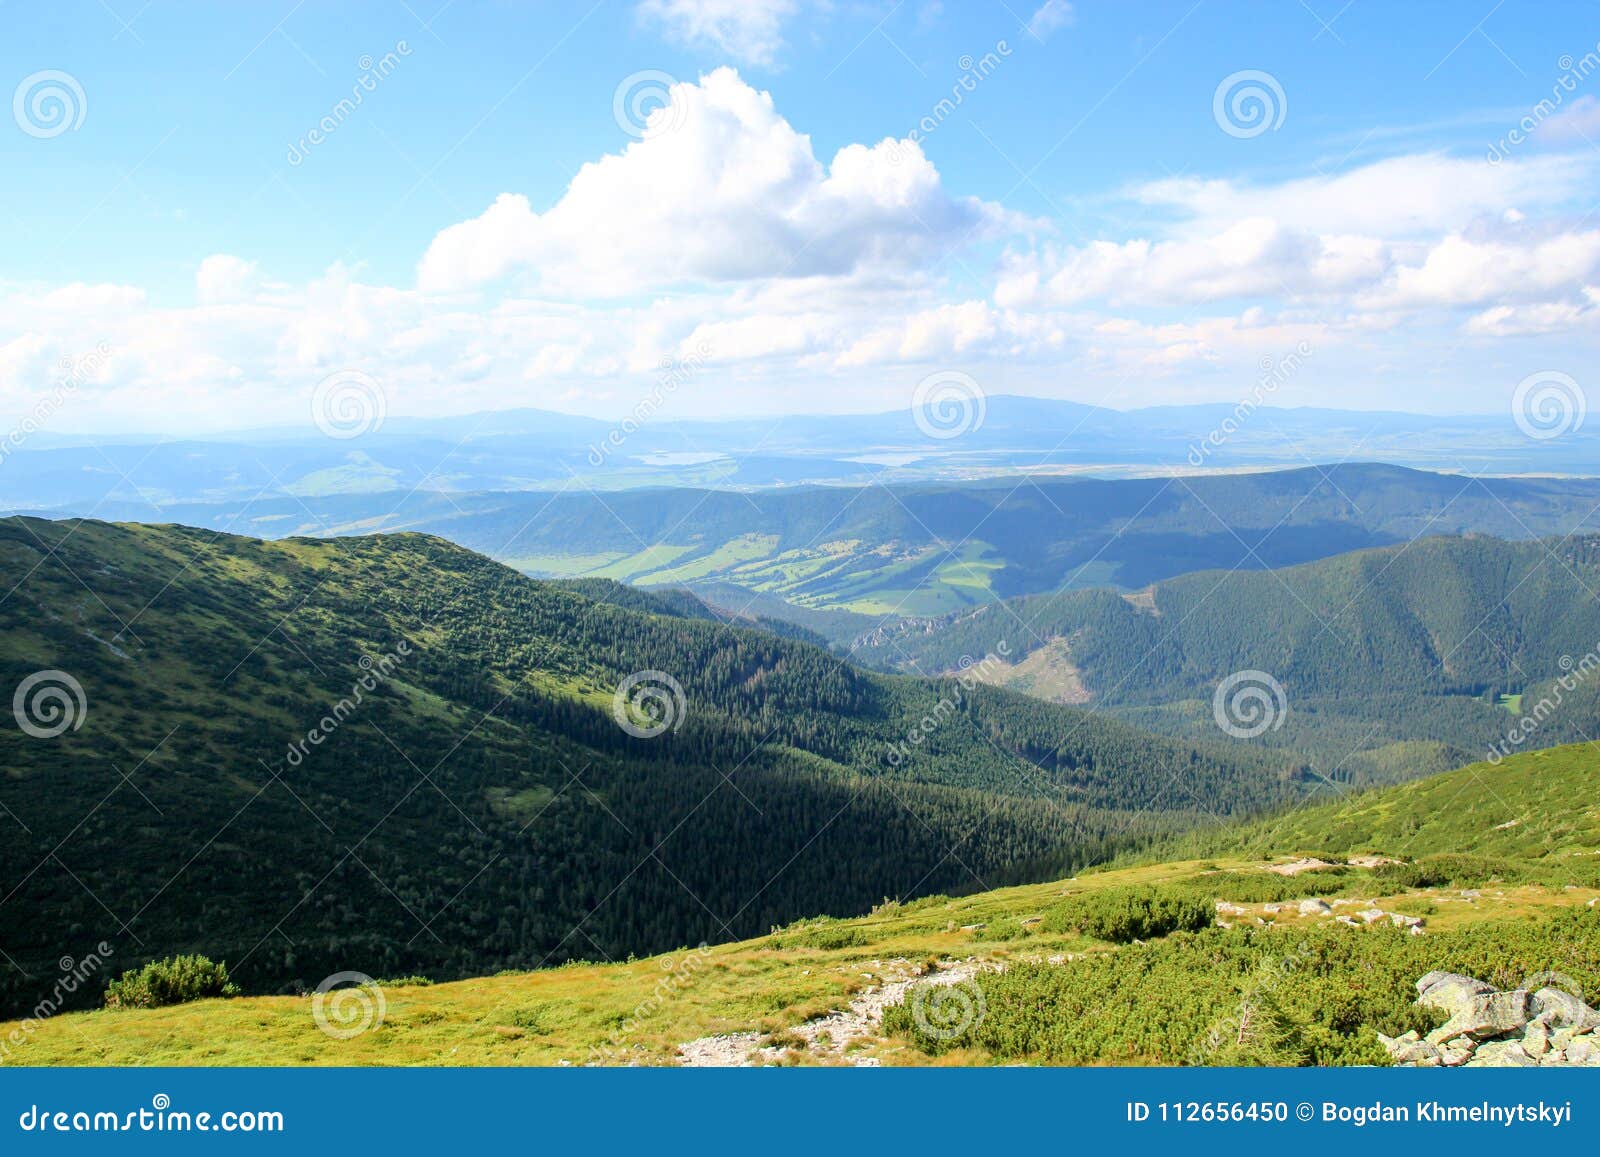 2,164,816 Beautiful Mountain Sky Stock Photos - Free & Royalty-Free Stock  Photos from Dreamstime